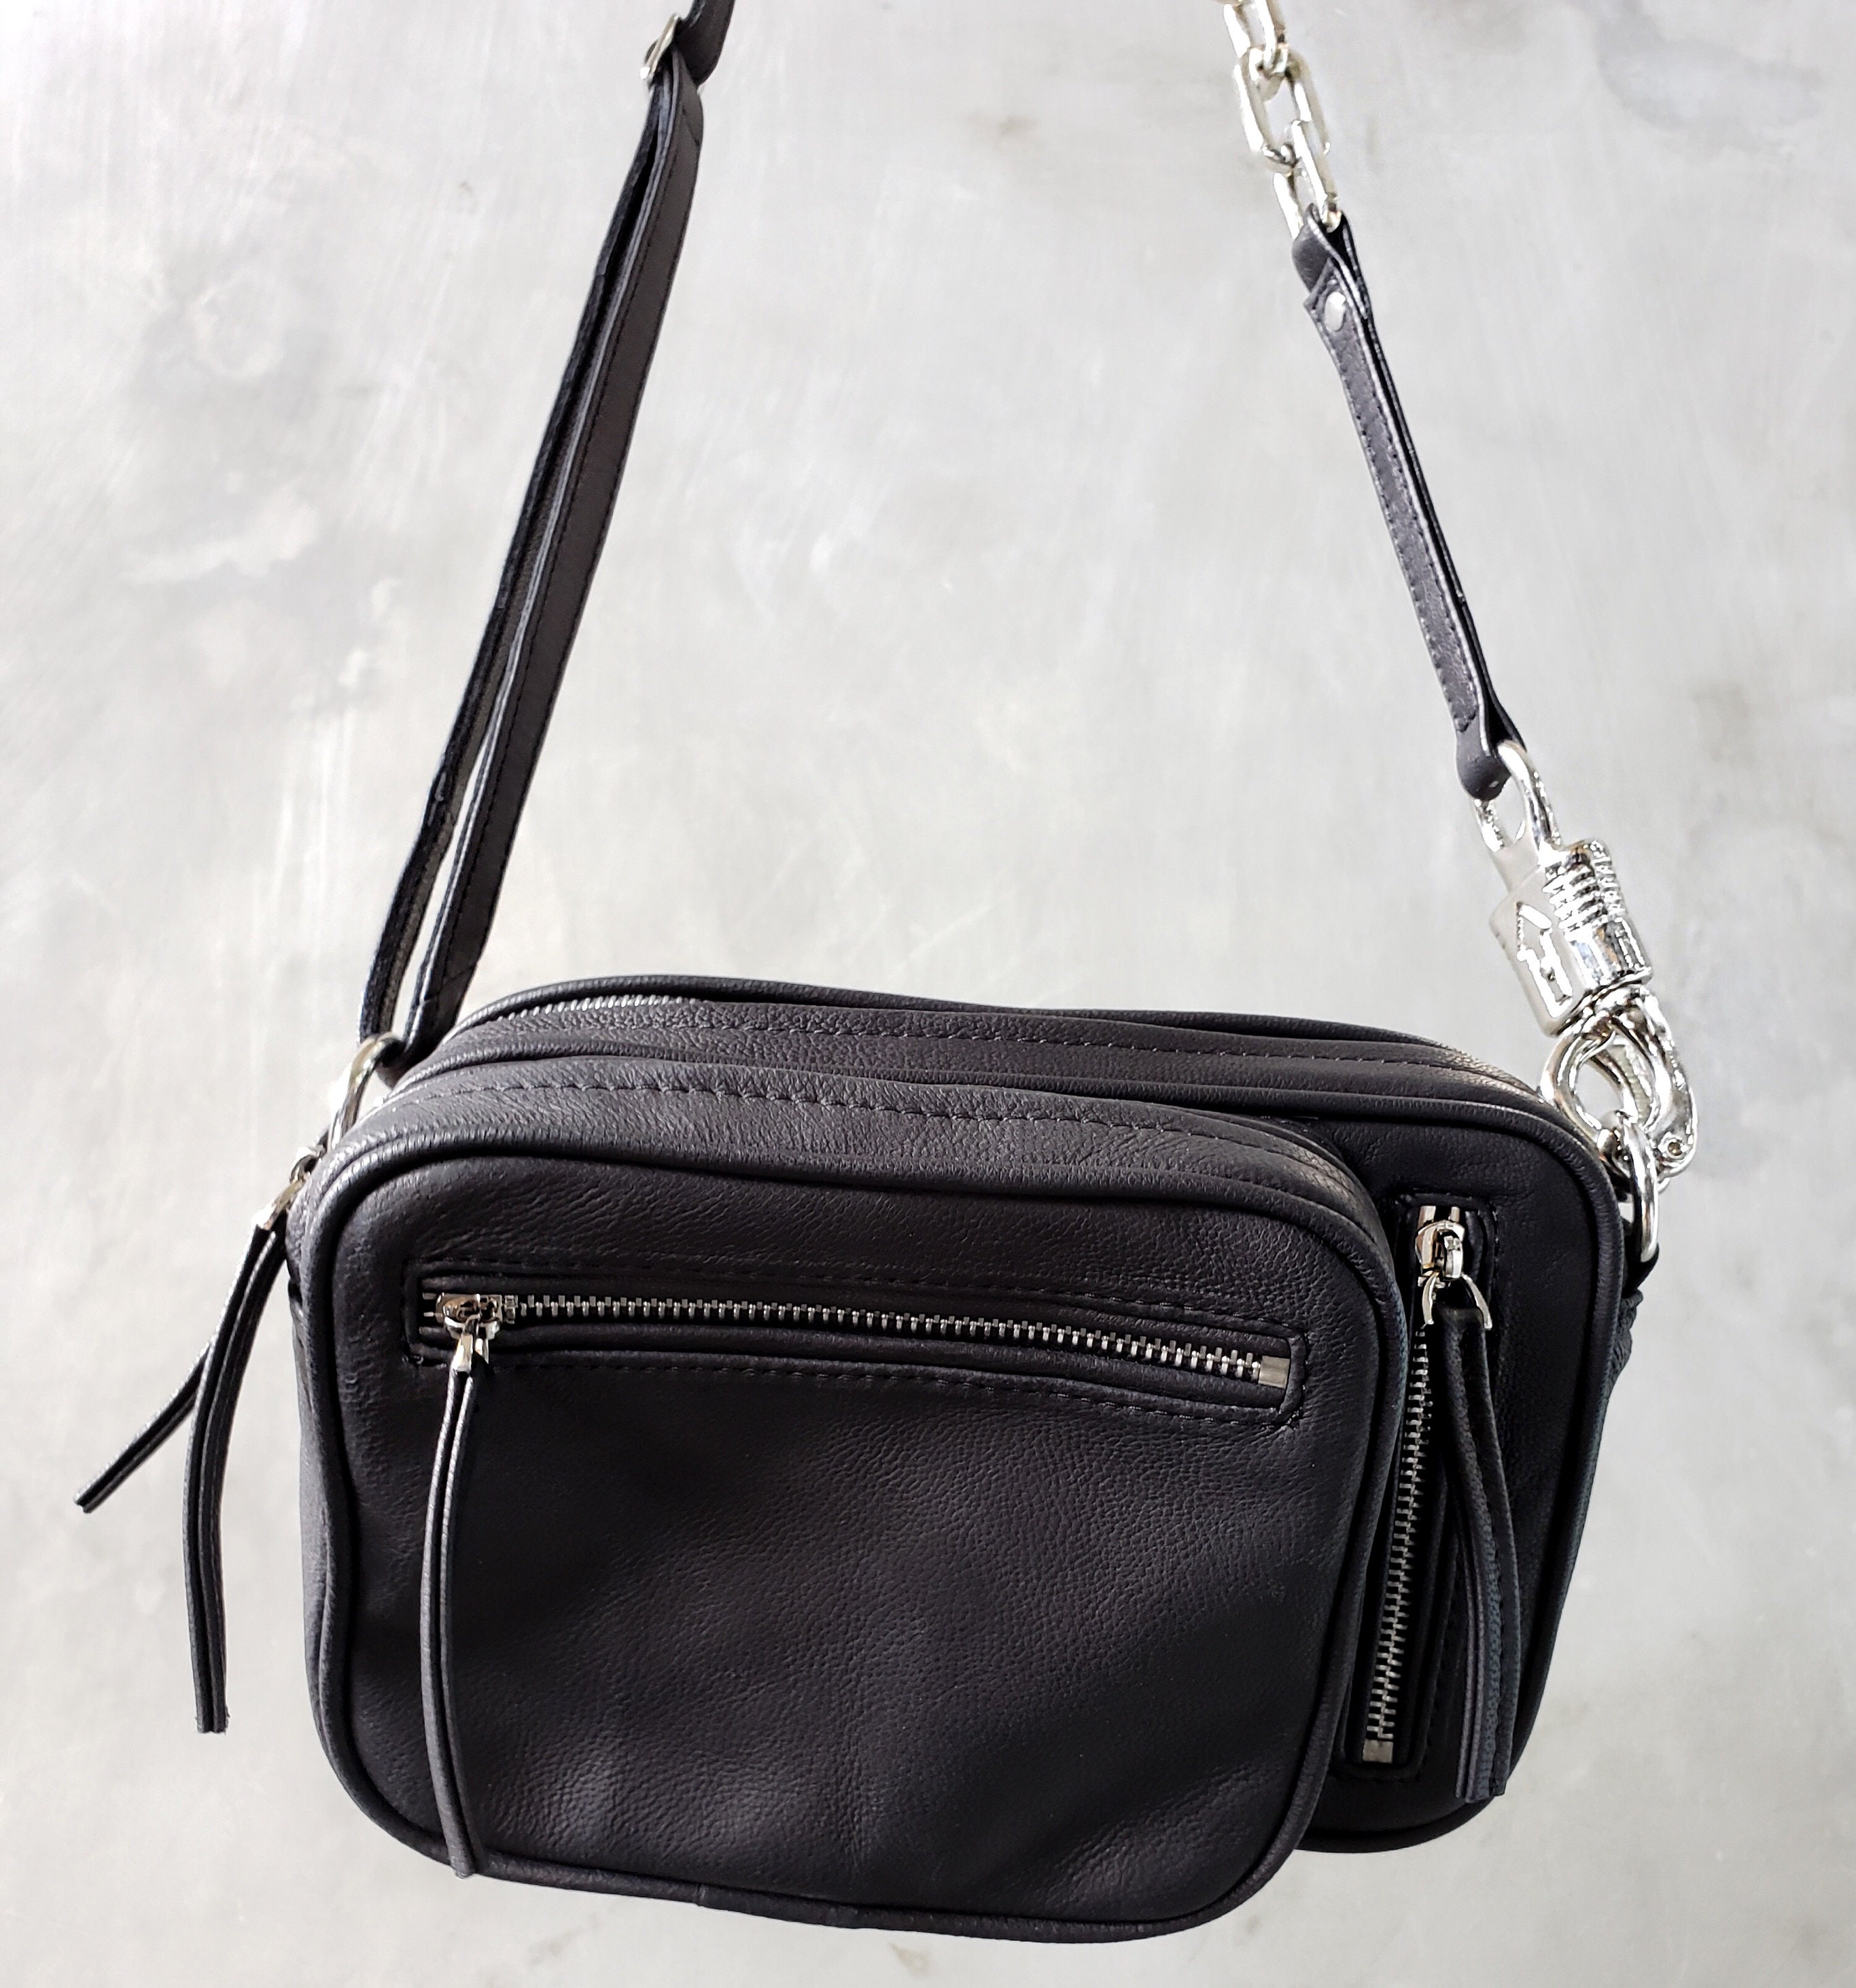 The Panic Bag Convertible Black Leather Shoulder Bag w/ | Etsy